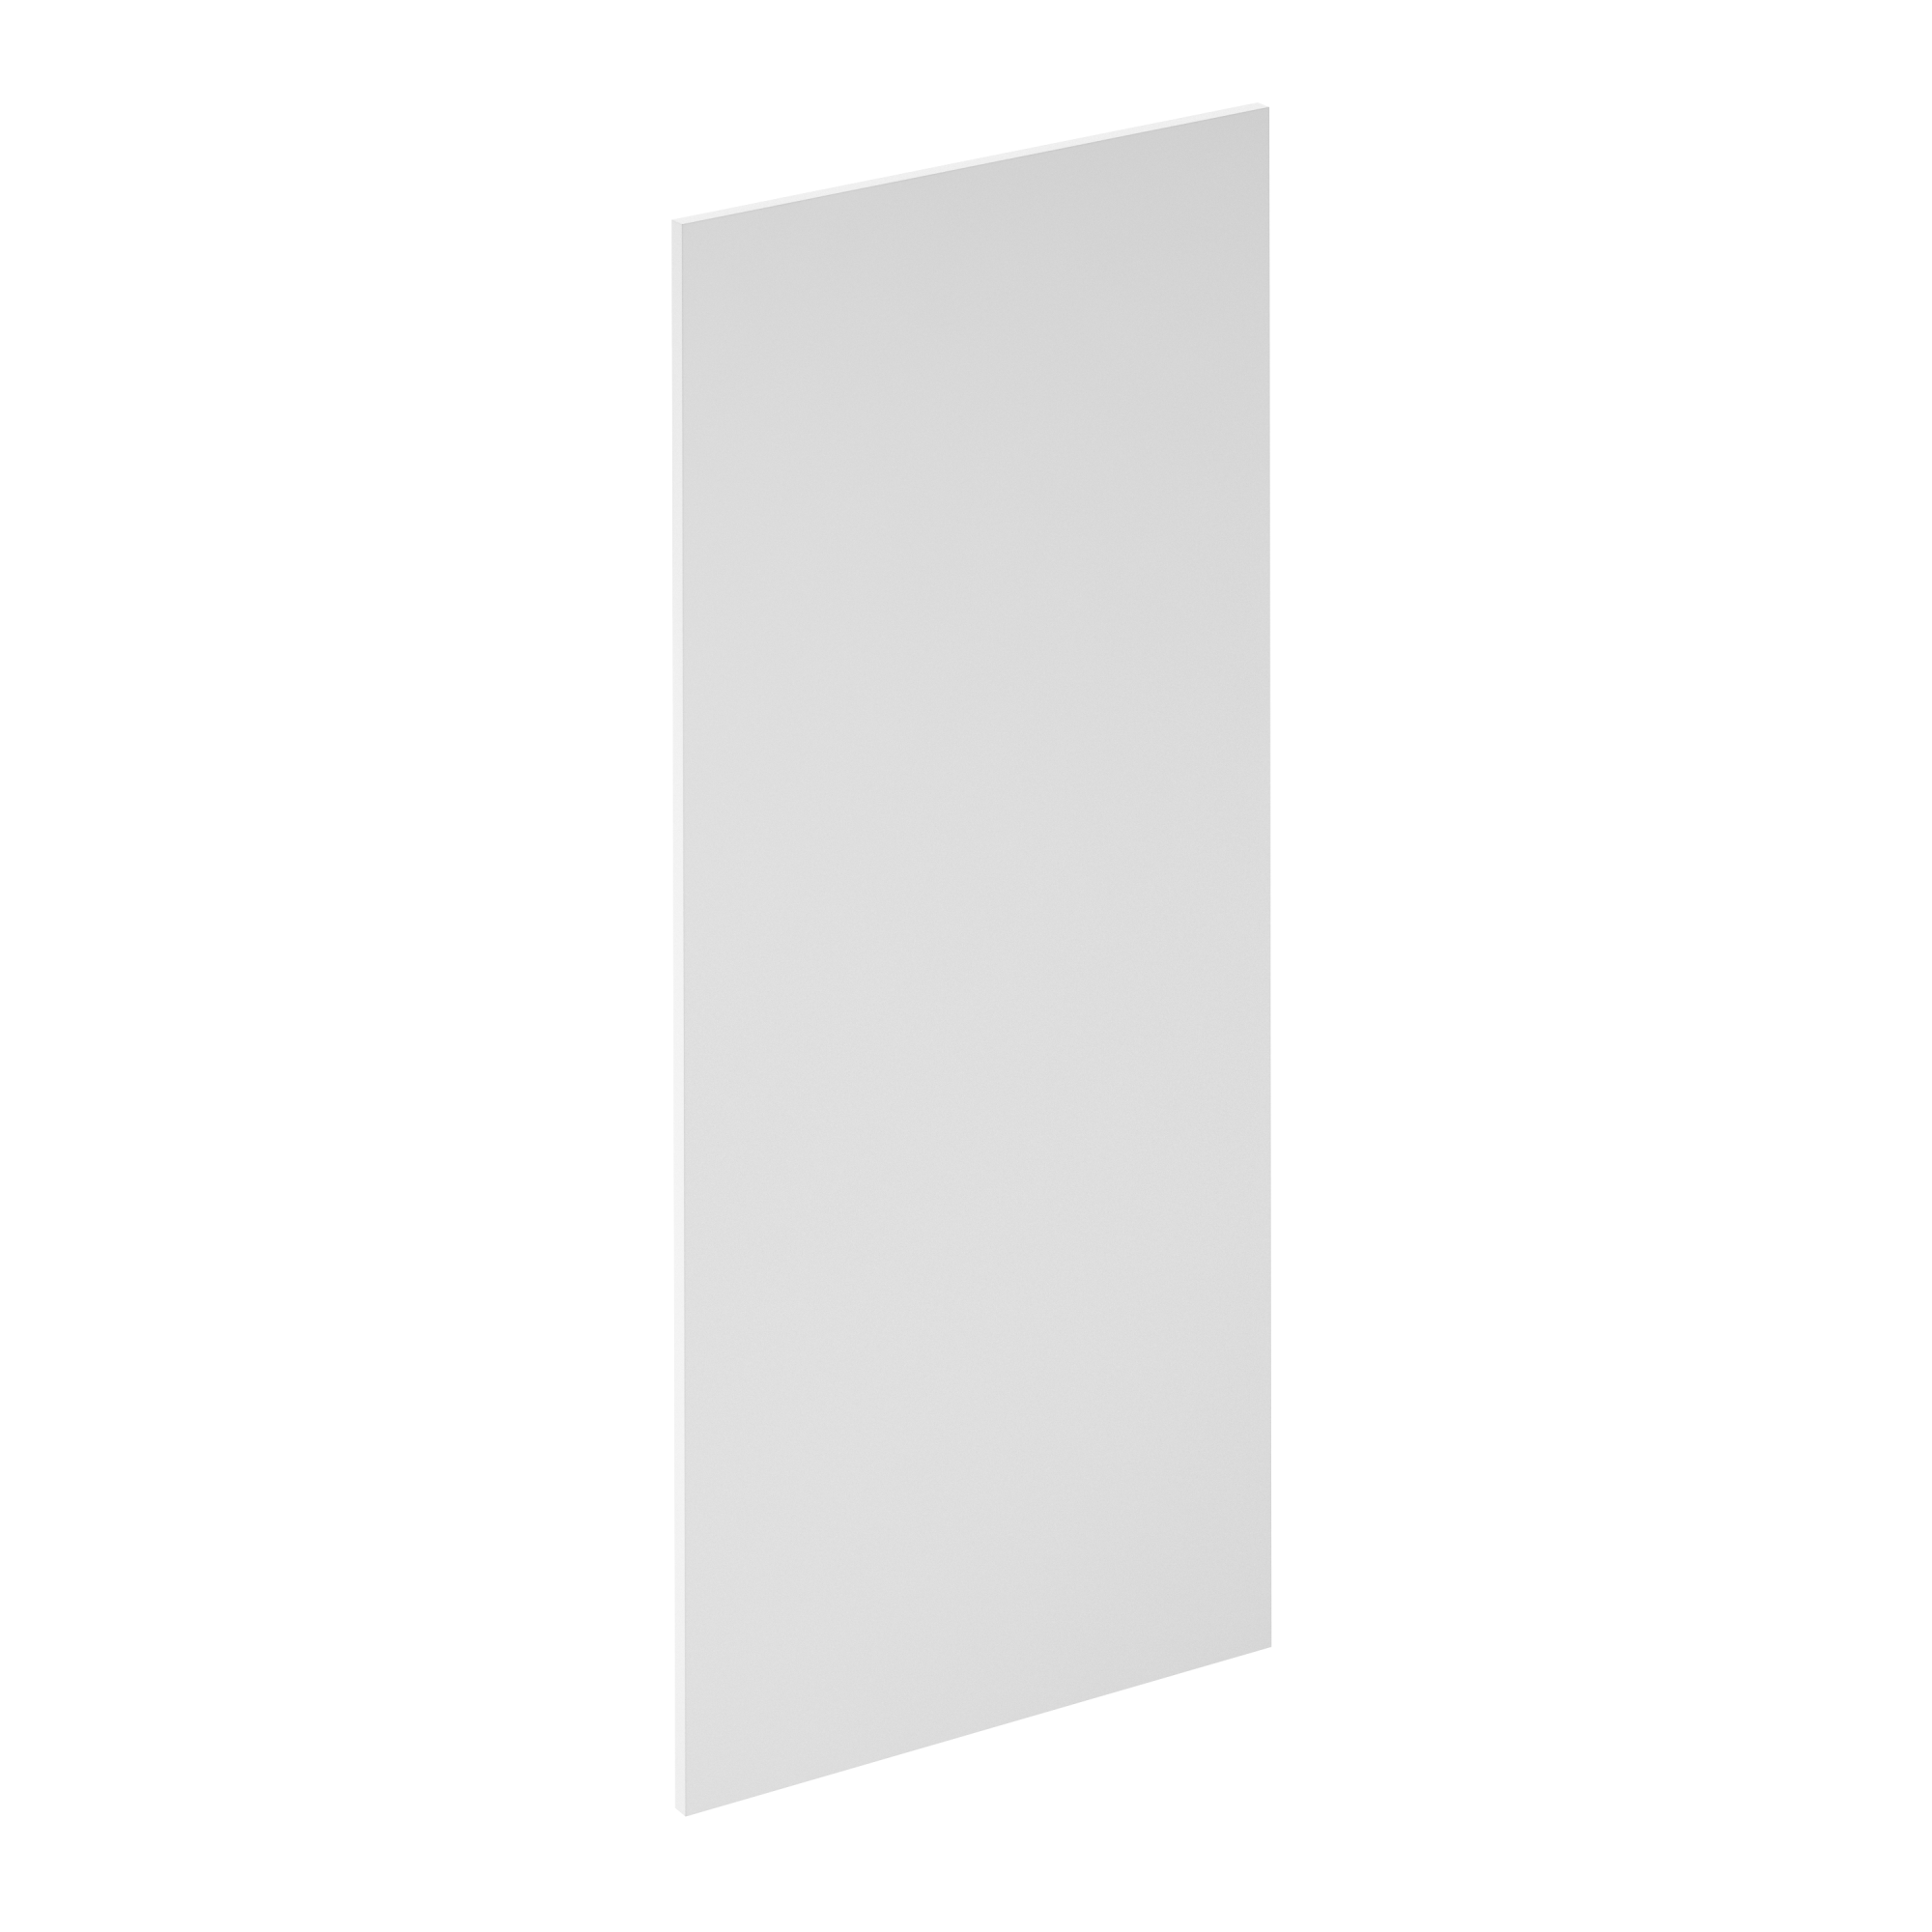 Puerta para mueble de cocina sofia blanco mate h 137.6 x l 60 cm